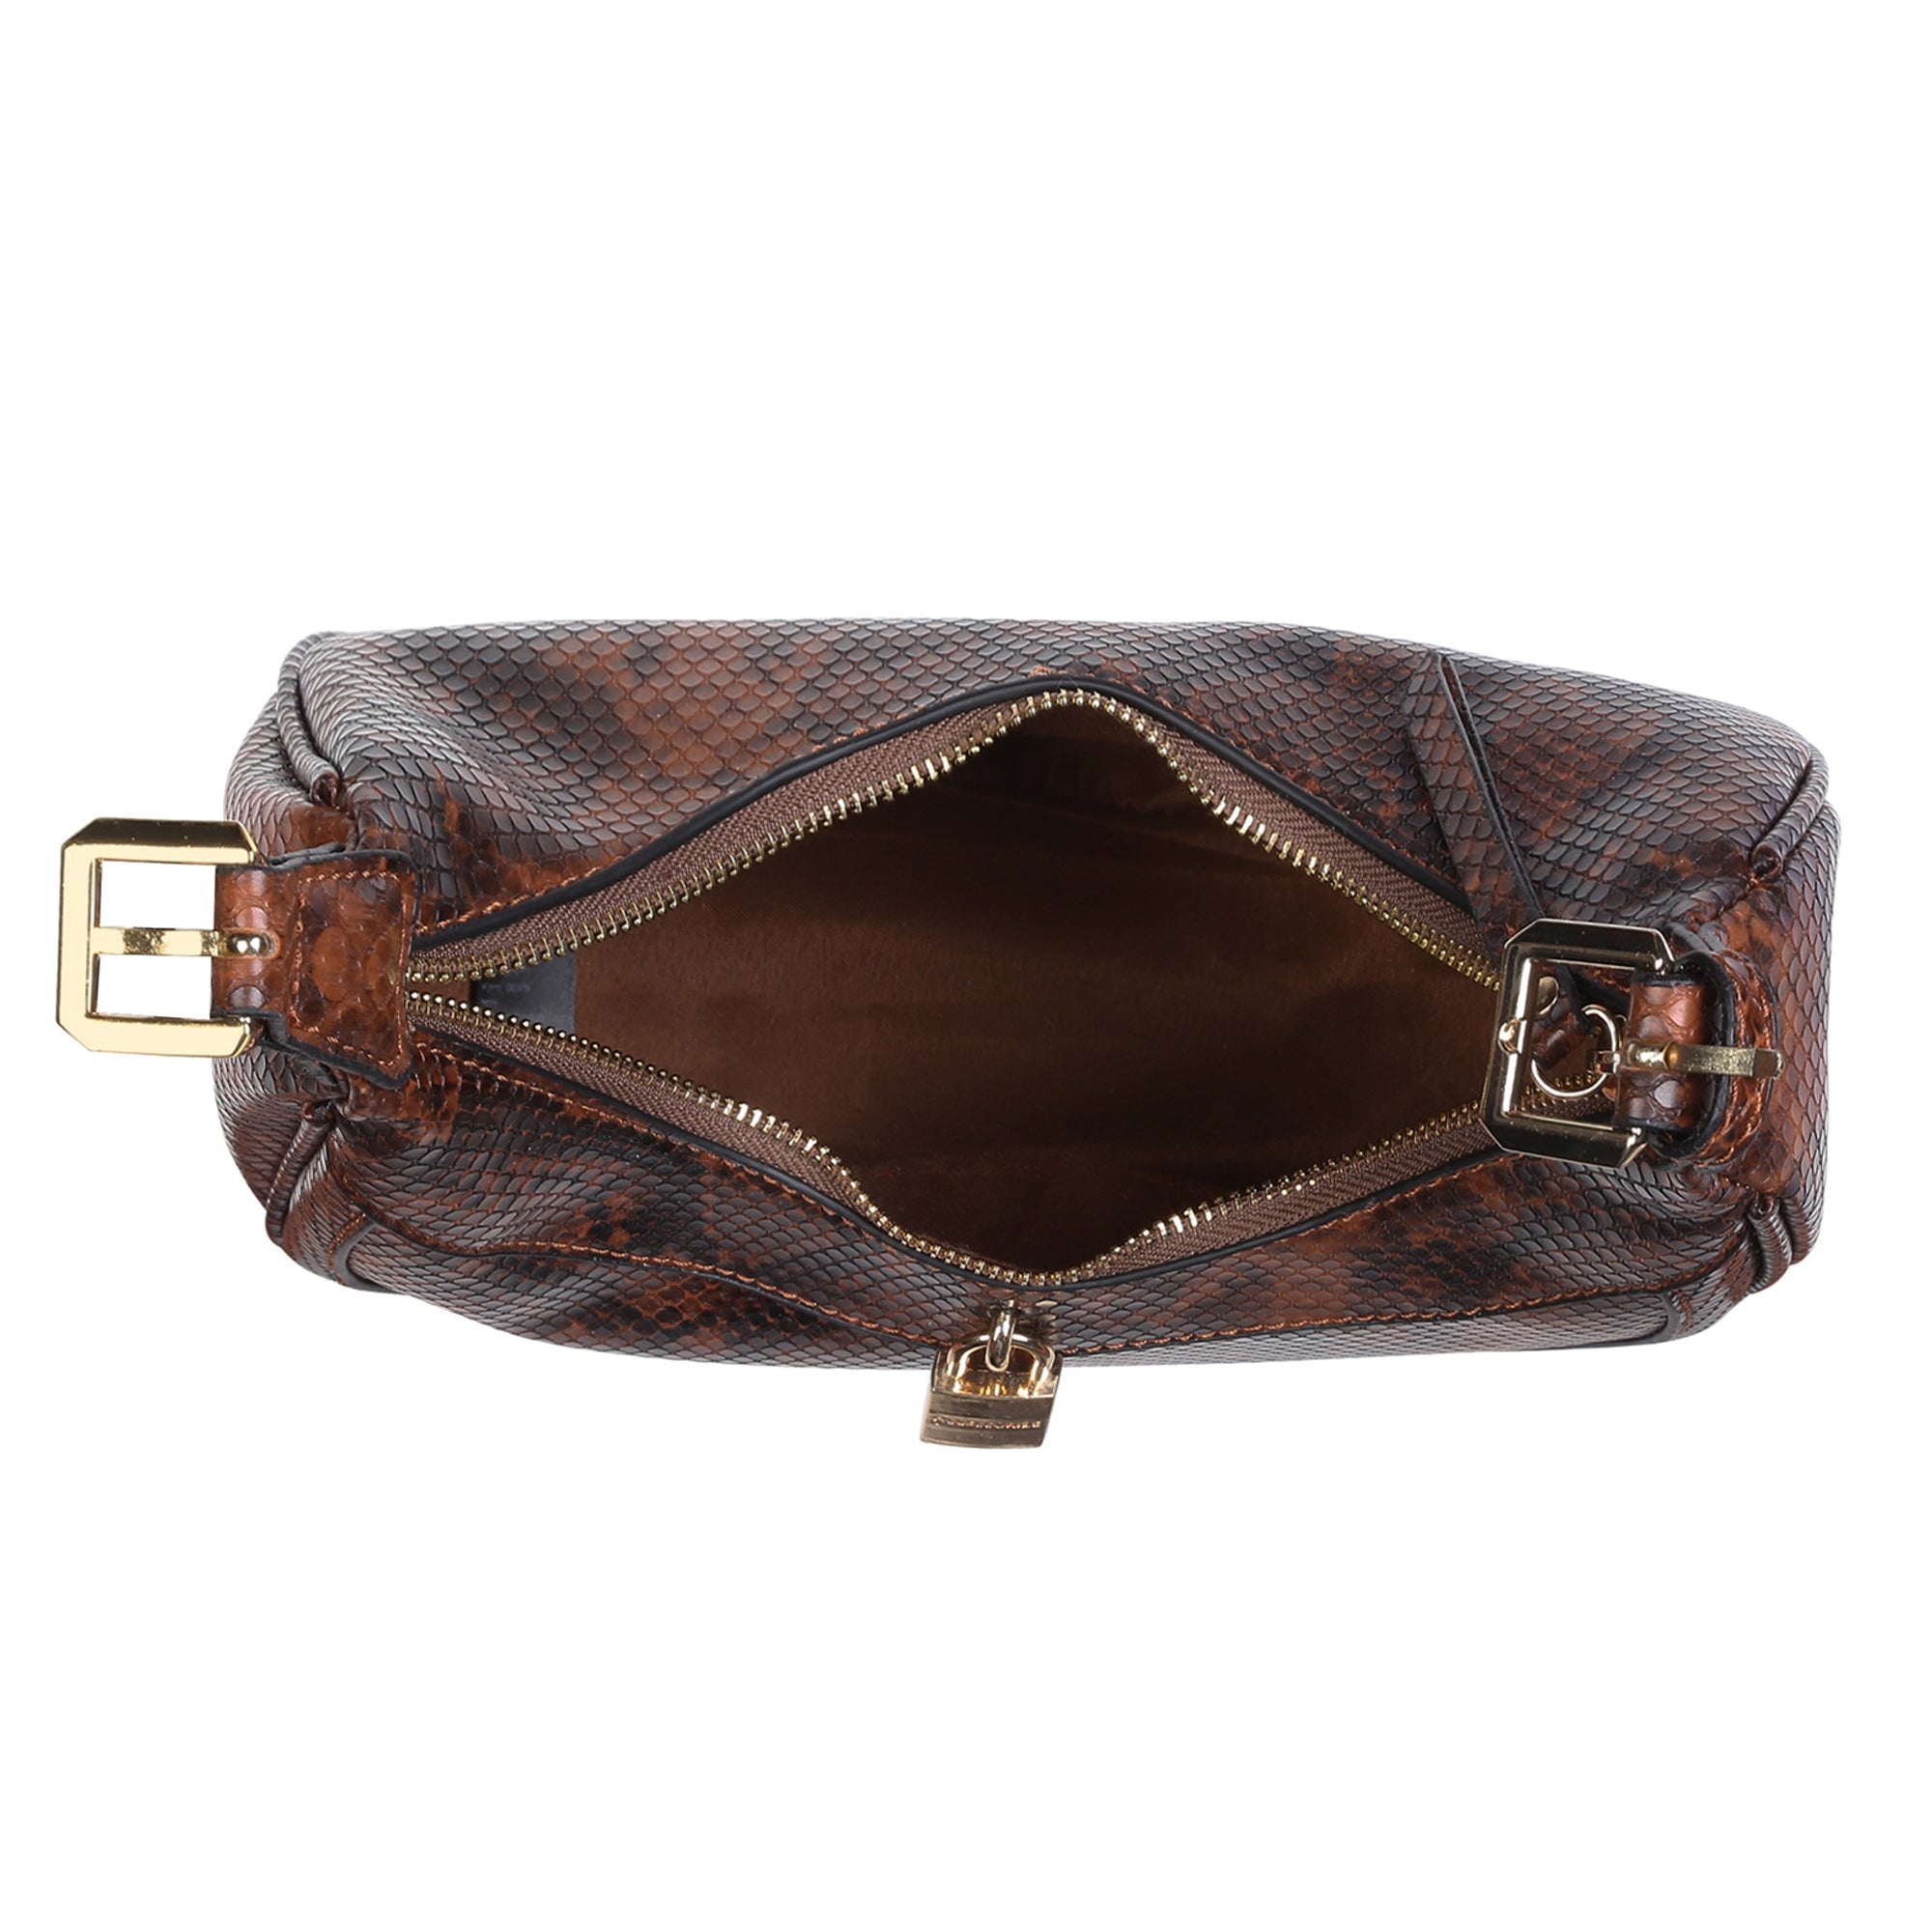 Accessorize London Women's Faux Leather Brown Snake Padlock Shoulder Bag